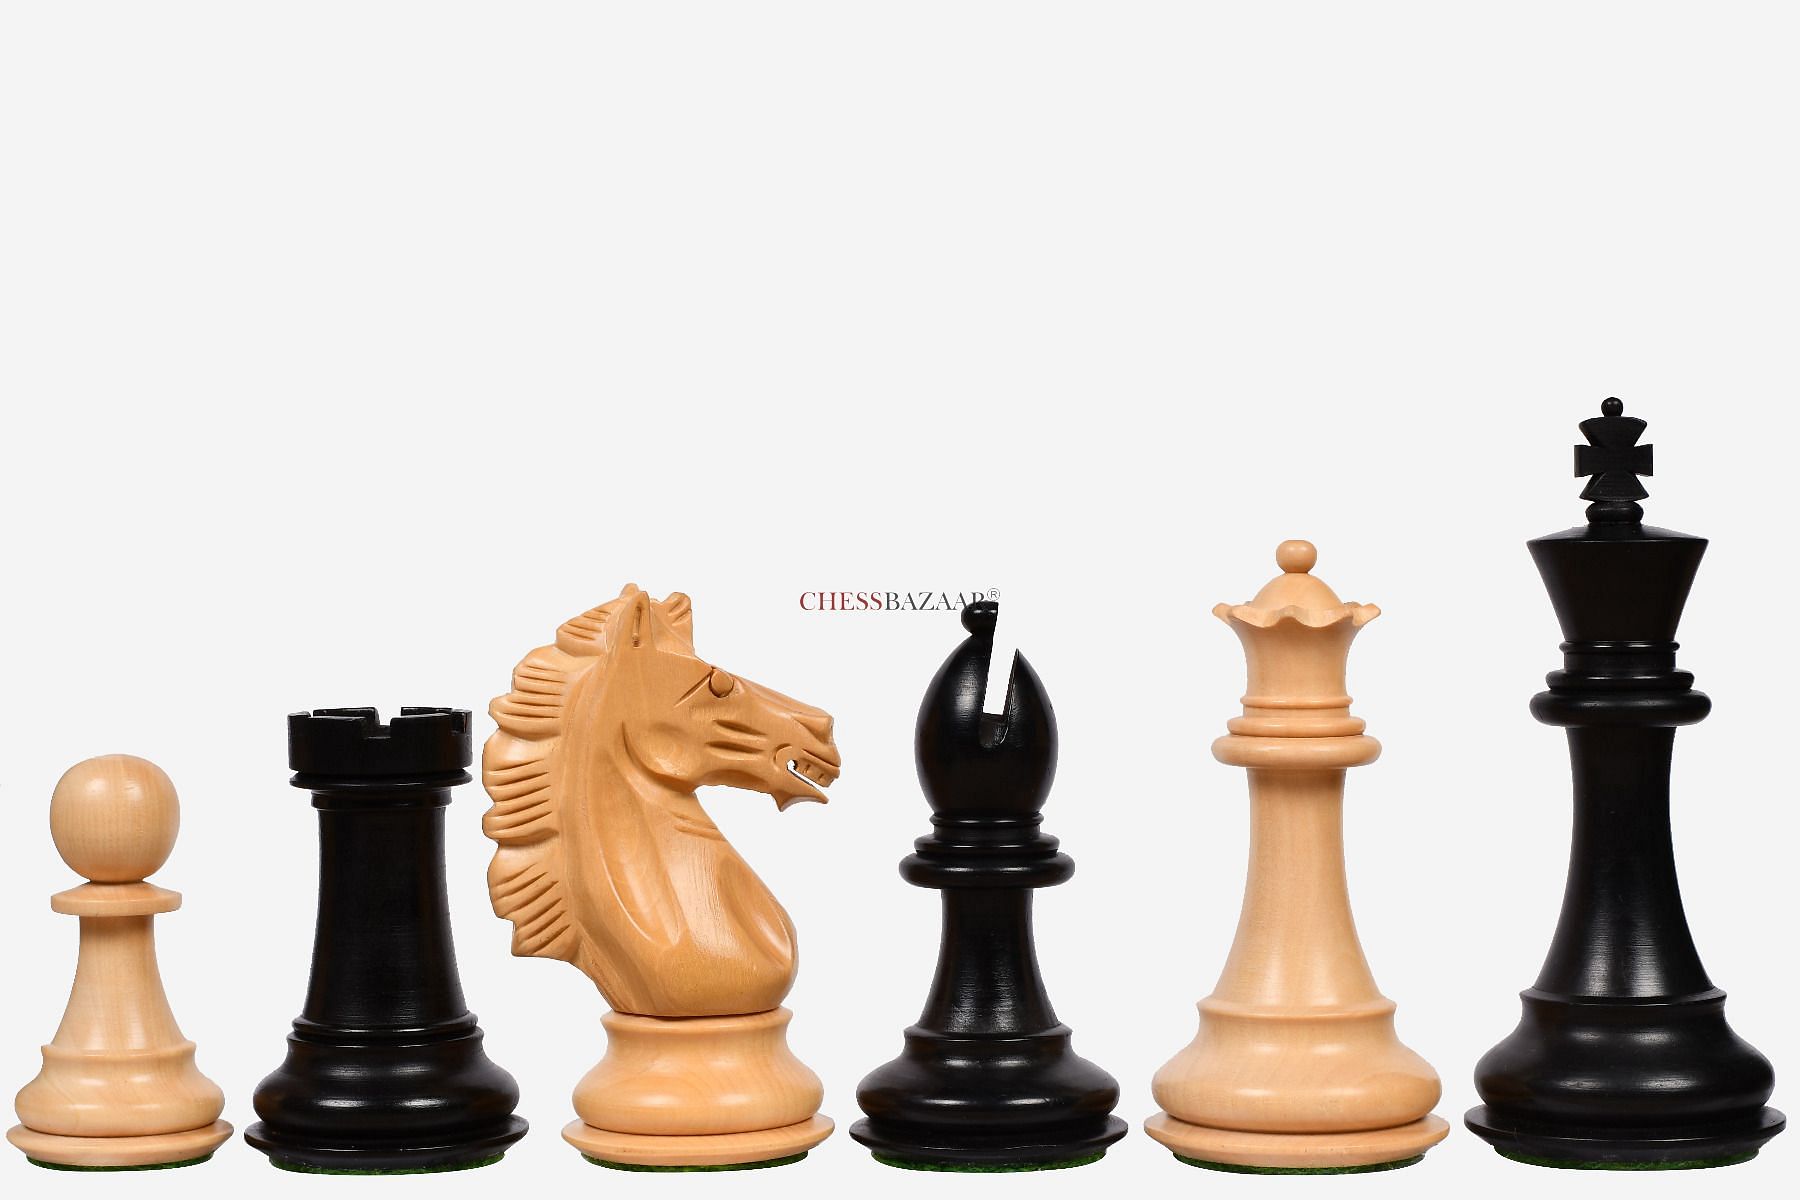 Online Chess Master